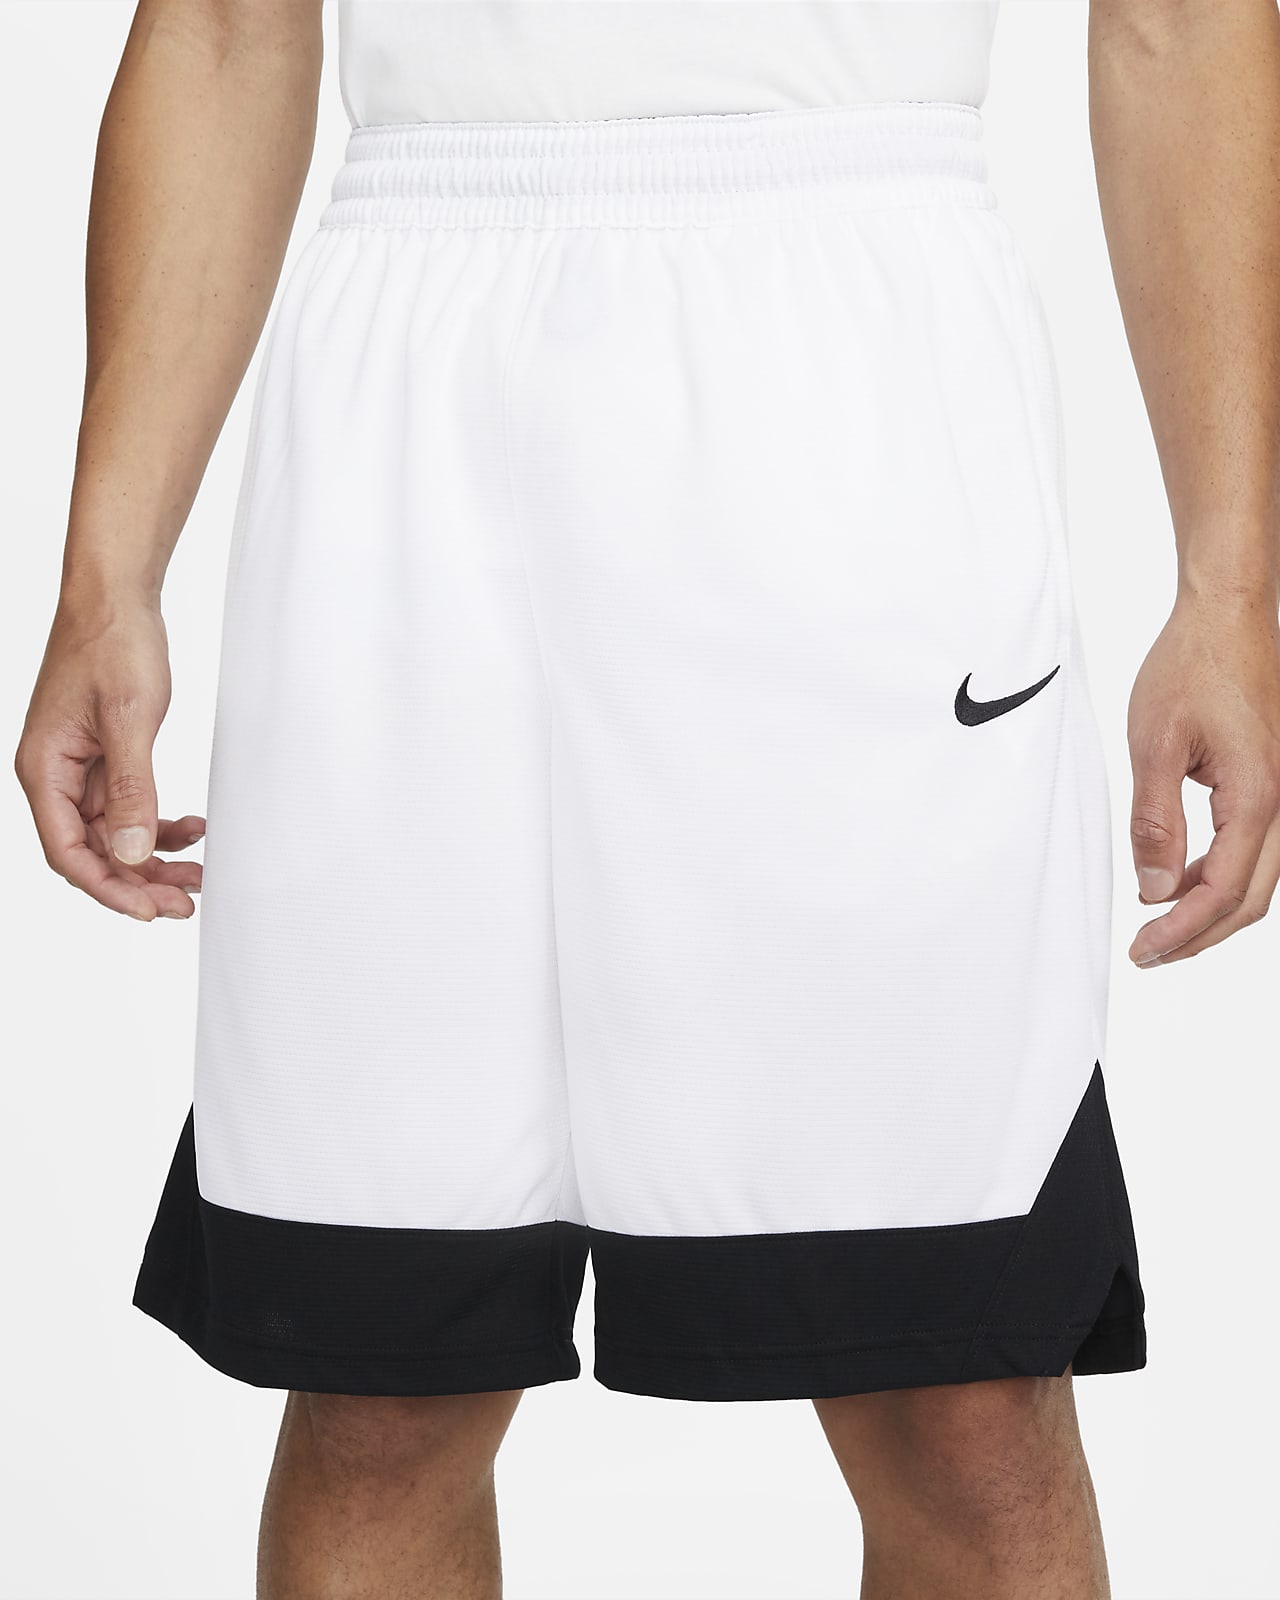 Nike Men's Shorts - White - XXL